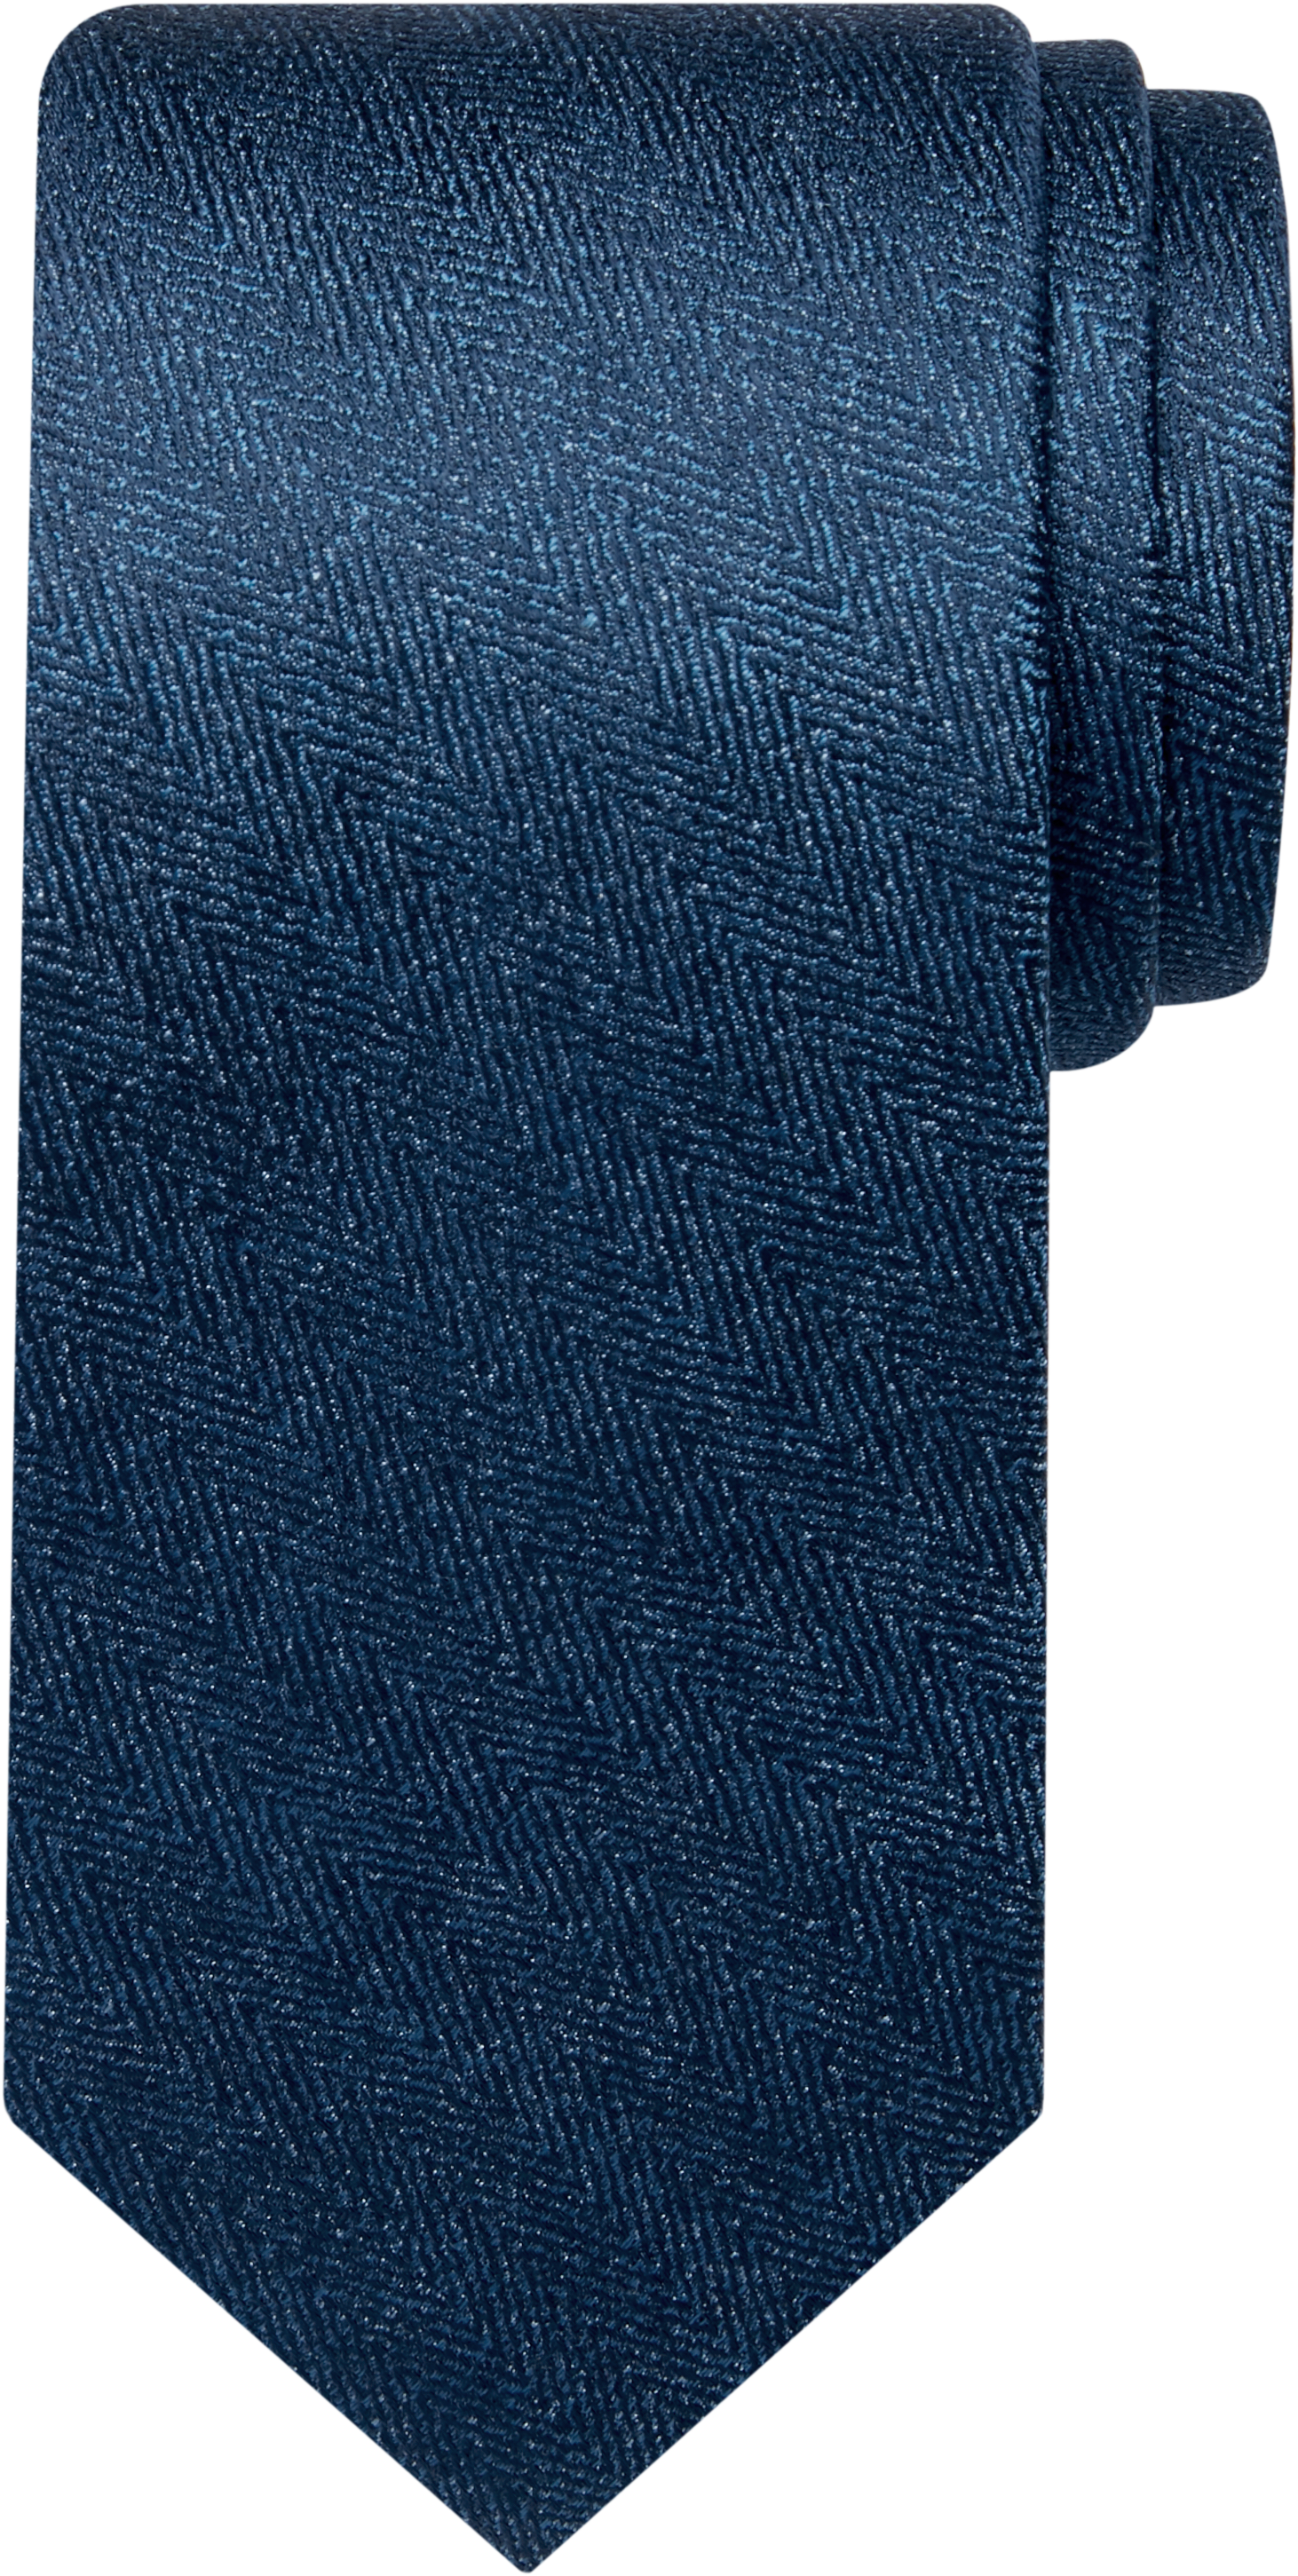 Joseph Abboud Indigo Blue Textured Narrow Tie, Blue - Men's HDN | Men's ...